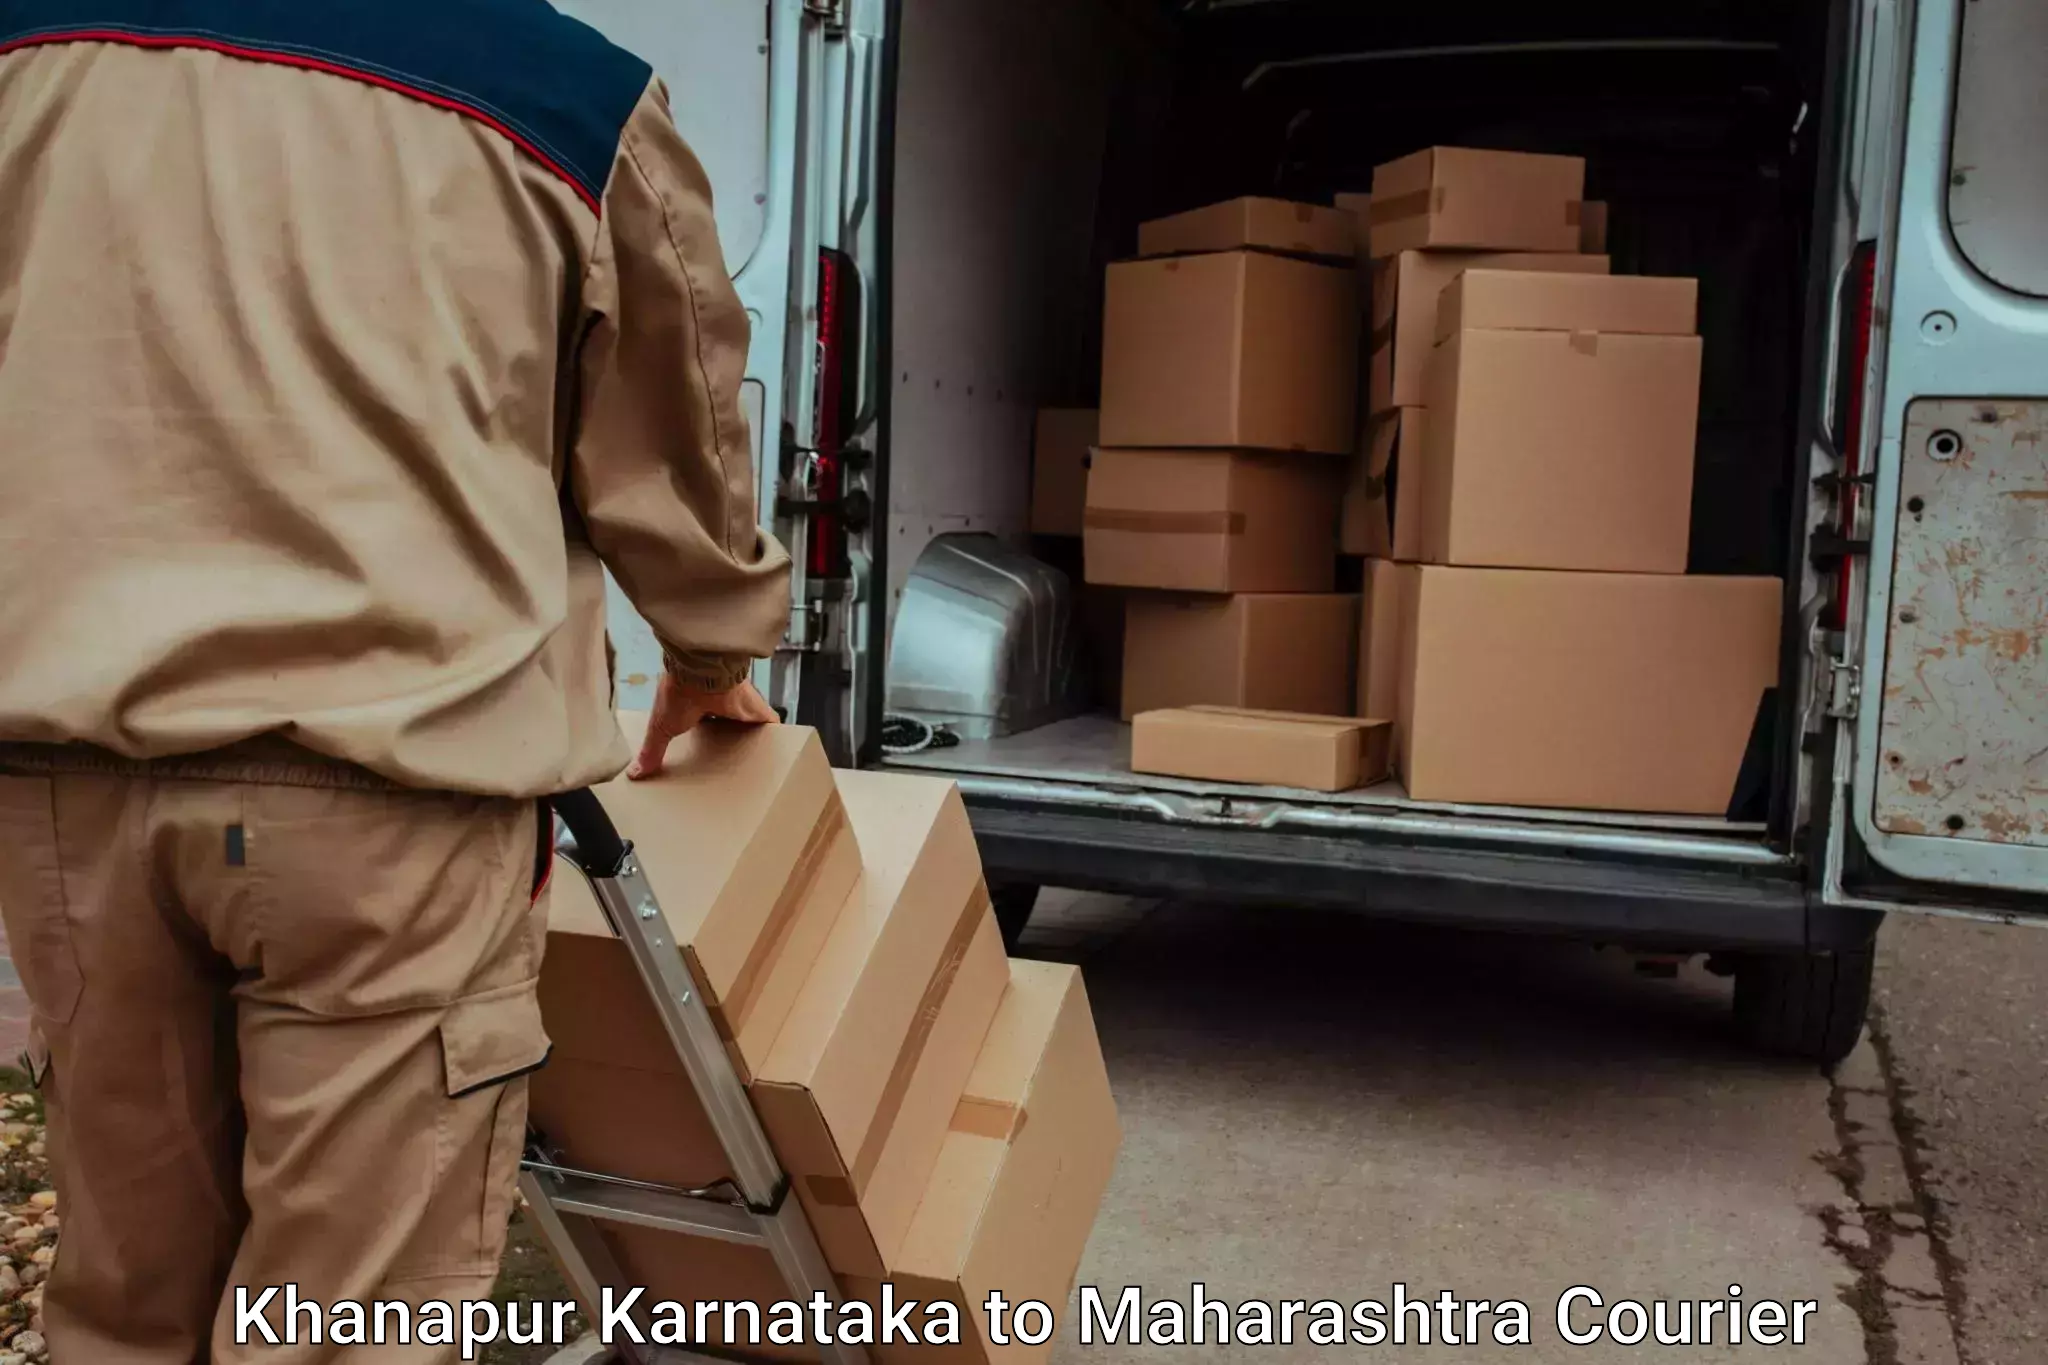 Luggage delivery providers Khanapur Karnataka to Mahur